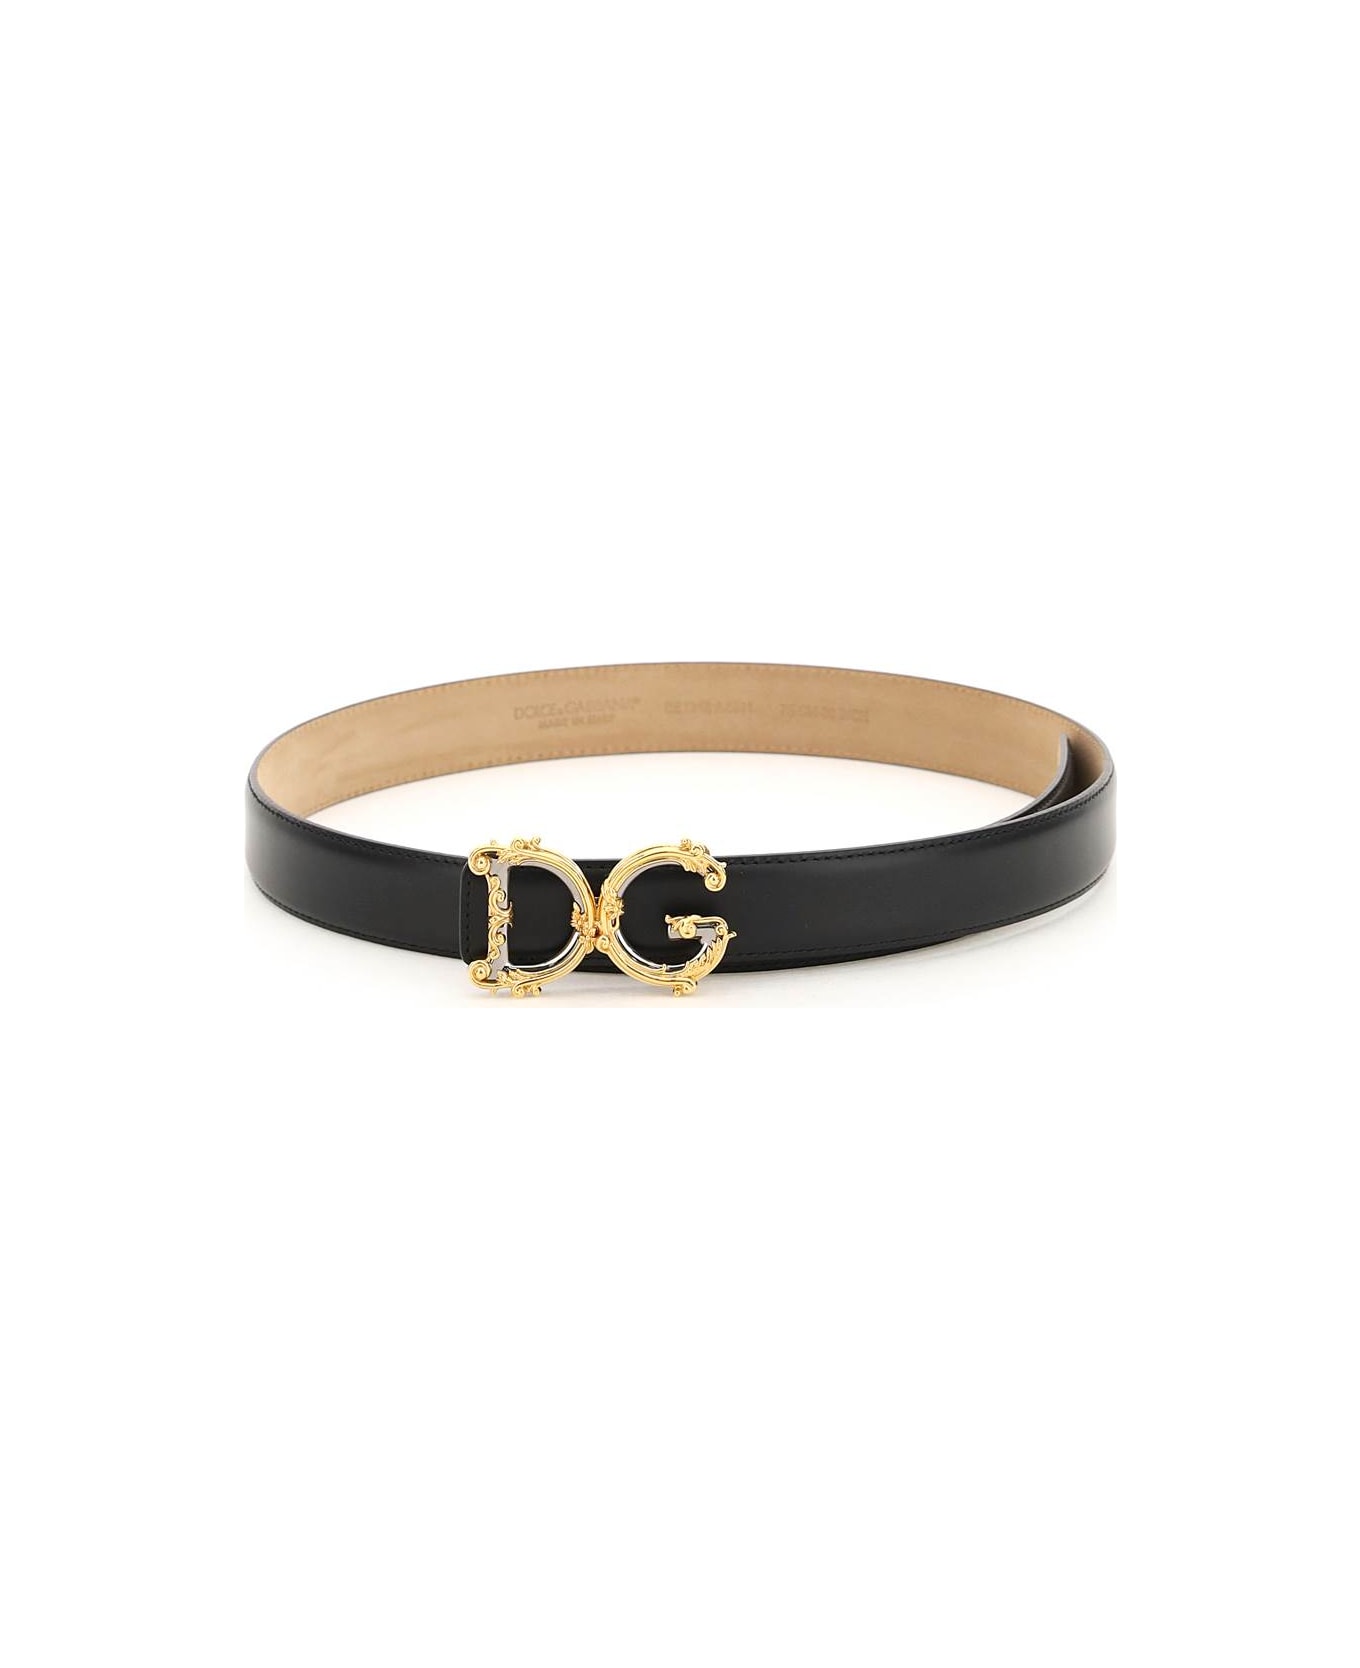 Dolce & Gabbana Dg Buckle Leather Belt - black